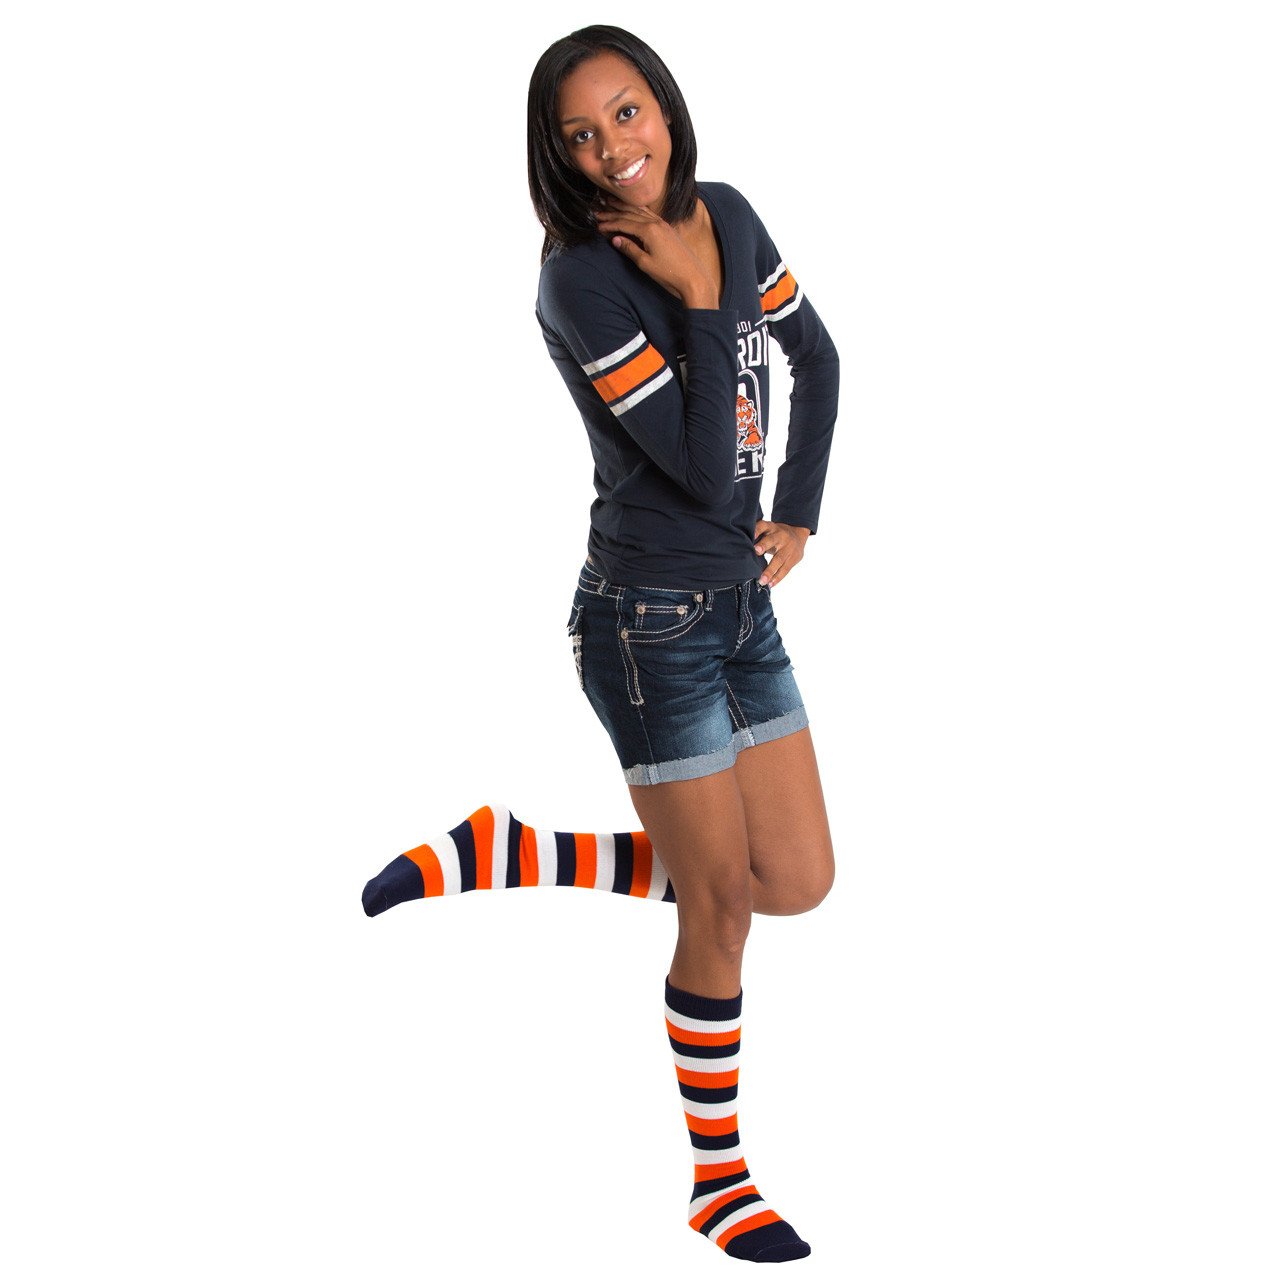 American Apparel Stripe Knee High Sock - Fighter Girls®